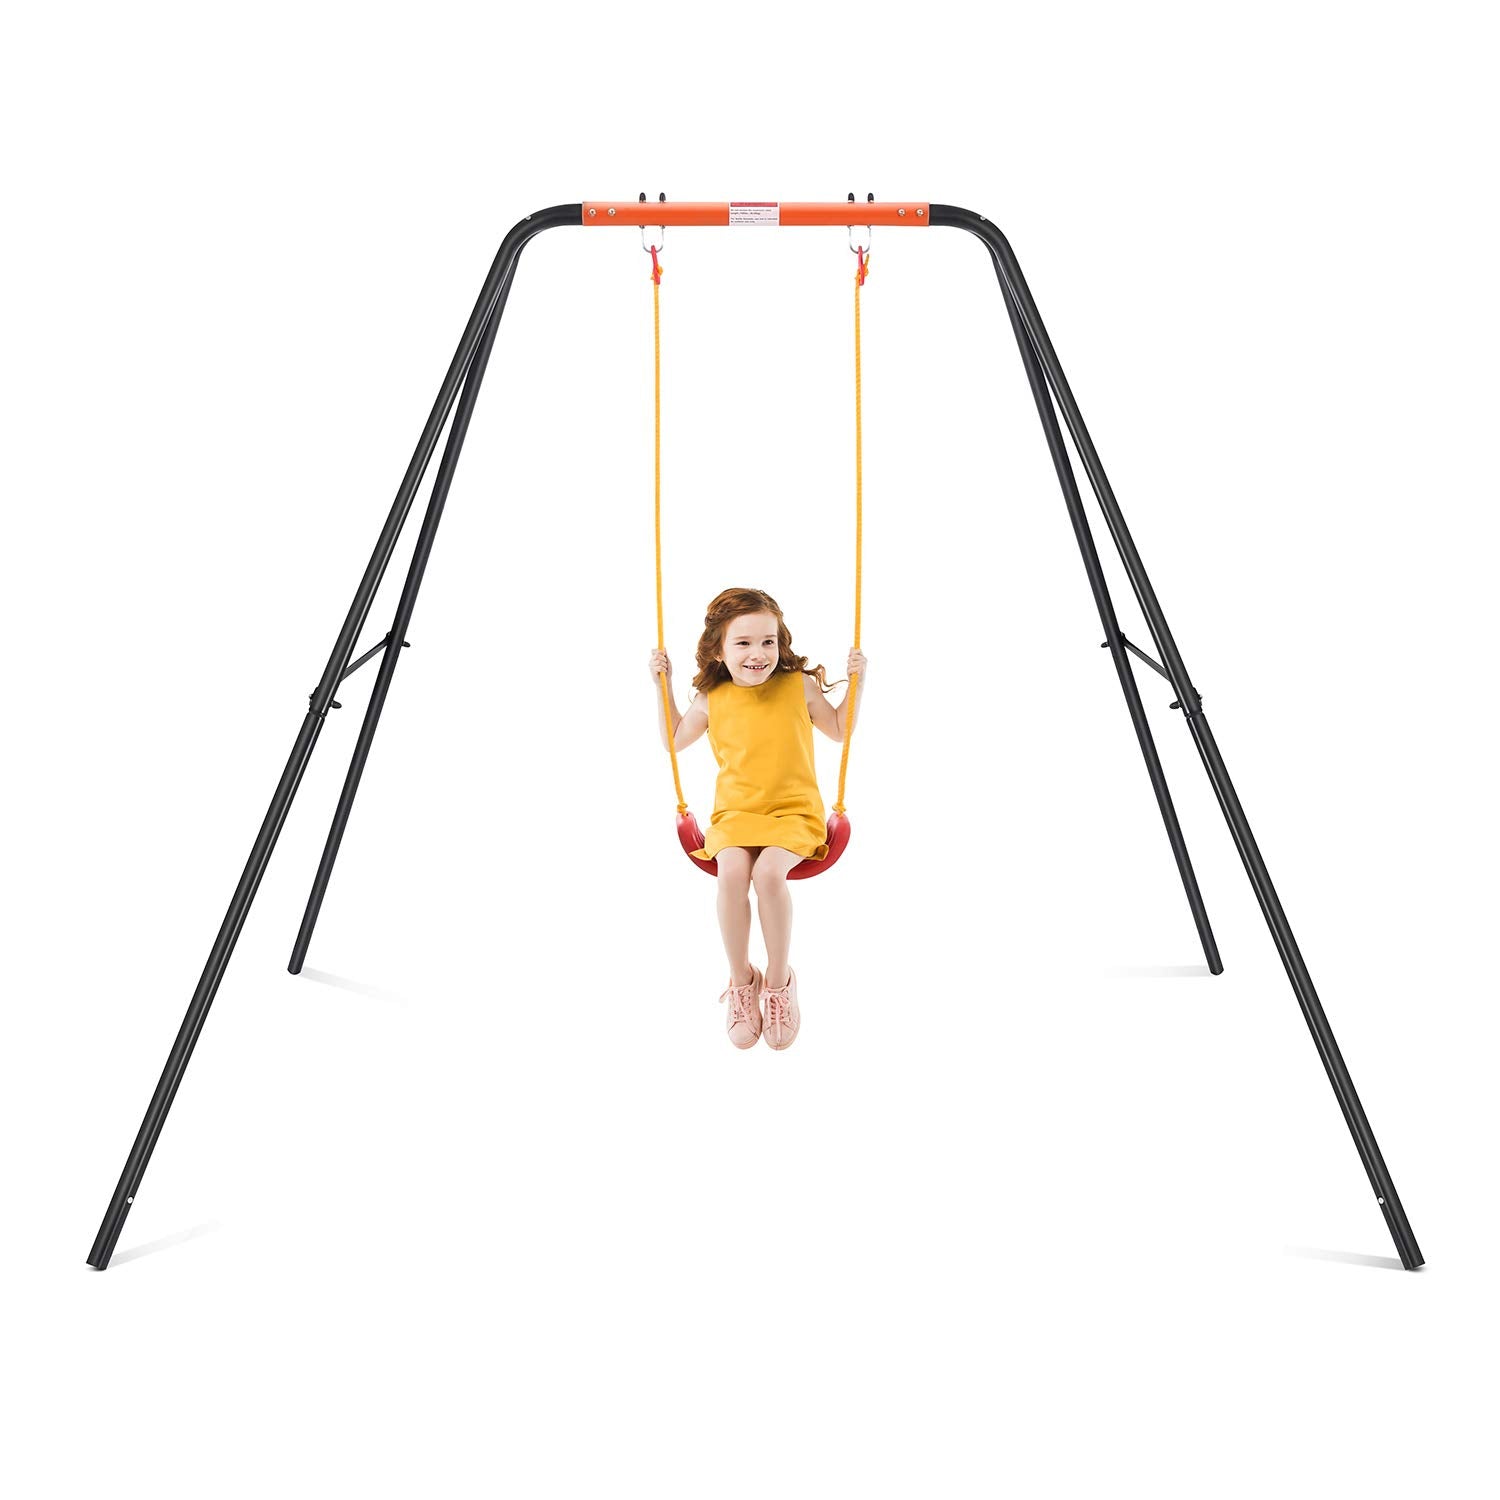 Load image into Gallery viewer, Swing Set for Backyard Metal Swing Heavy Duty Steel Swing Set Outdoor for Kids Toddler 1-12 Years Old, Fun for Kids Backyard
